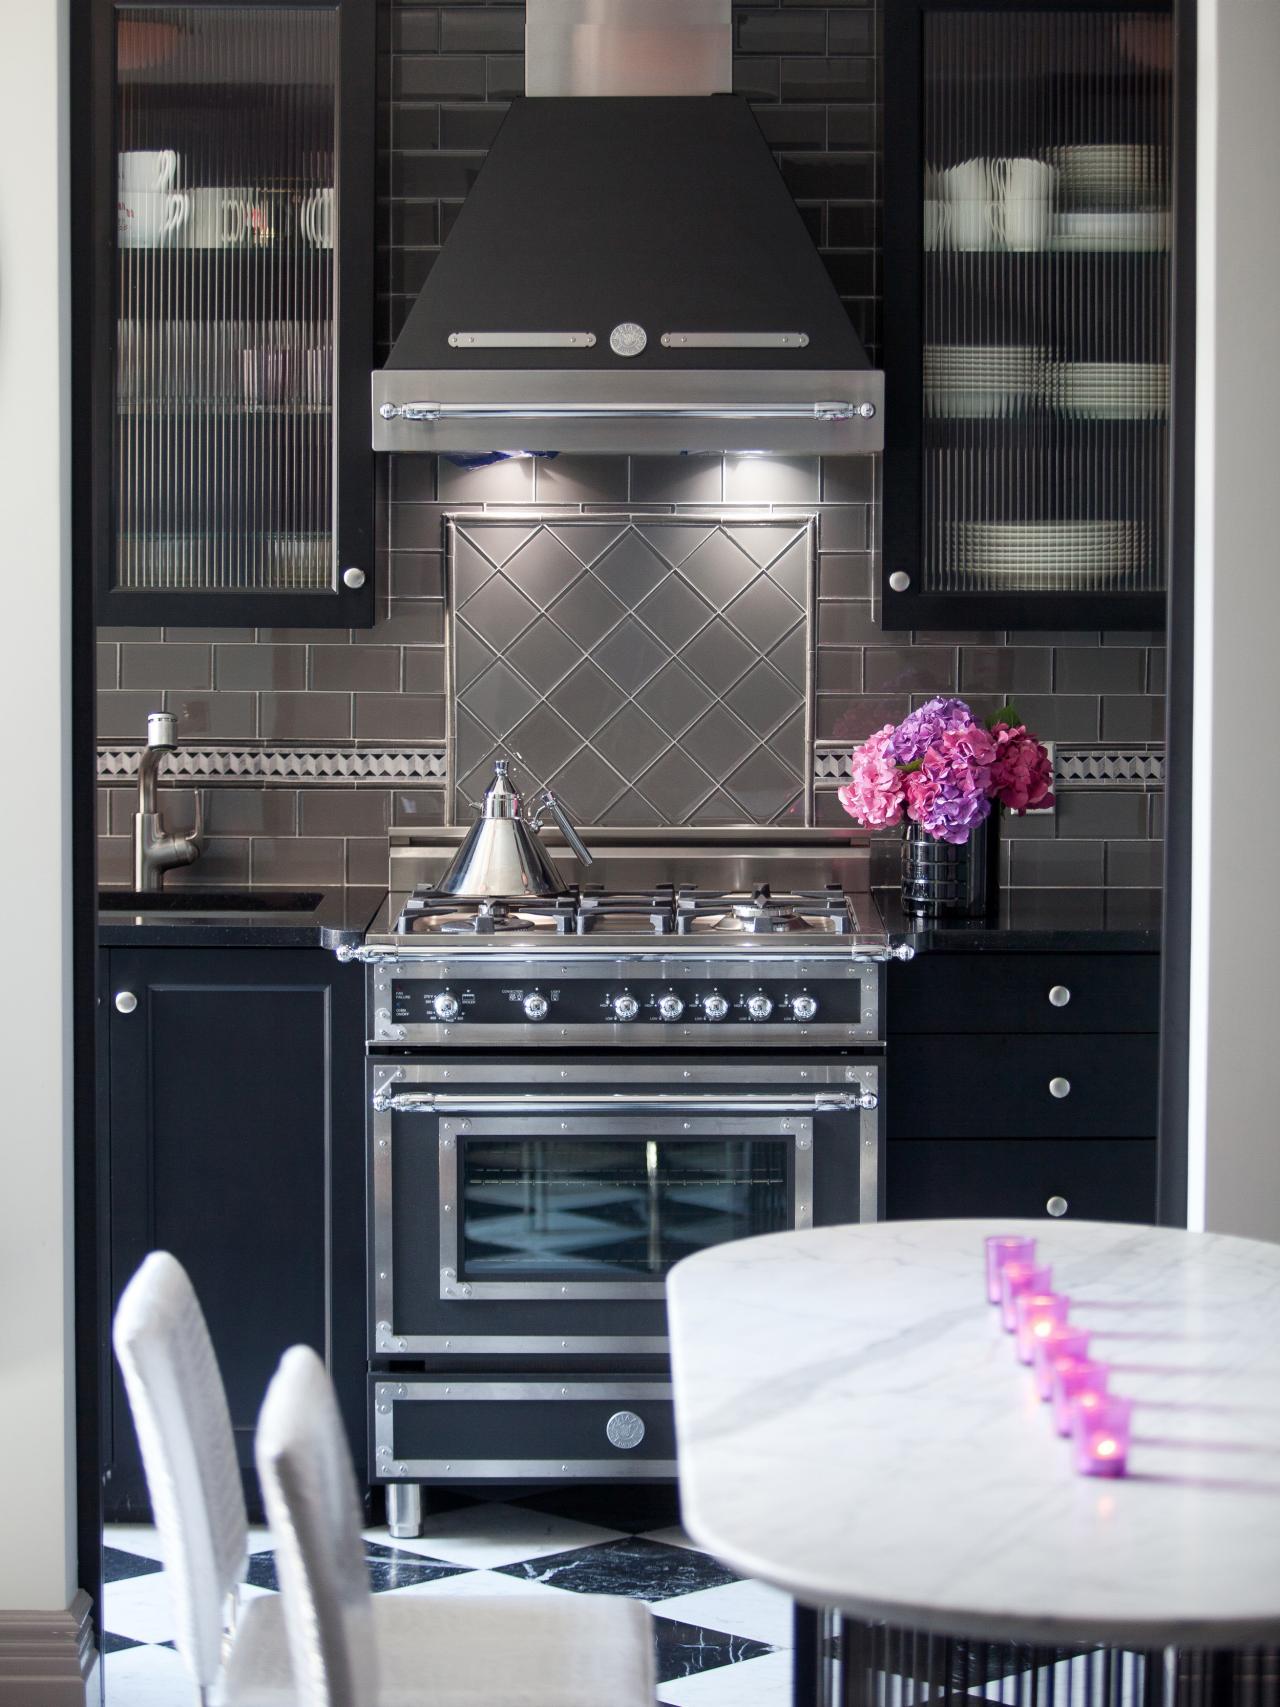 Black Kitchens Are the New White   HGTV's Decorating & Design Blog ...